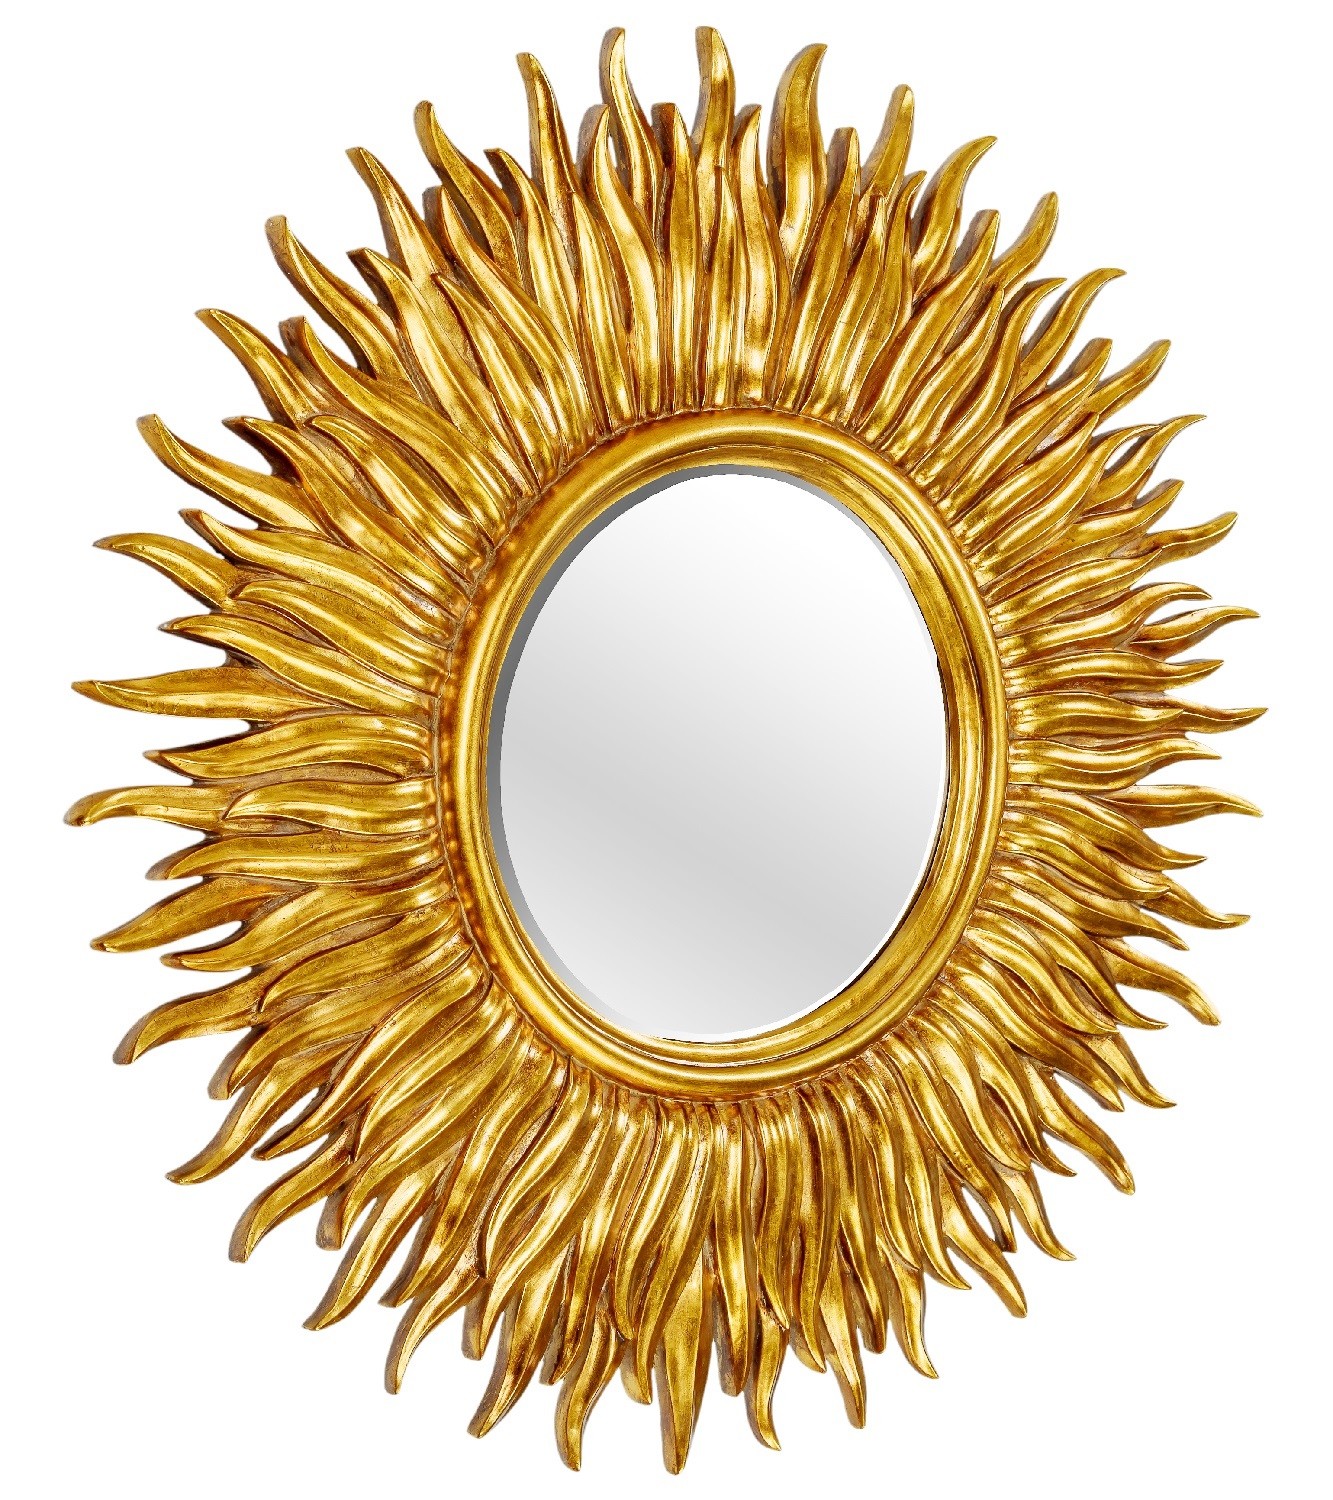 Зеркало gold. Зеркало настенное круглое золотое "Гелиос Голд". Зеркало солнце Леруа Мерлен. Зеркало солнышко. Зеркало - солнце, Кимберли золото.